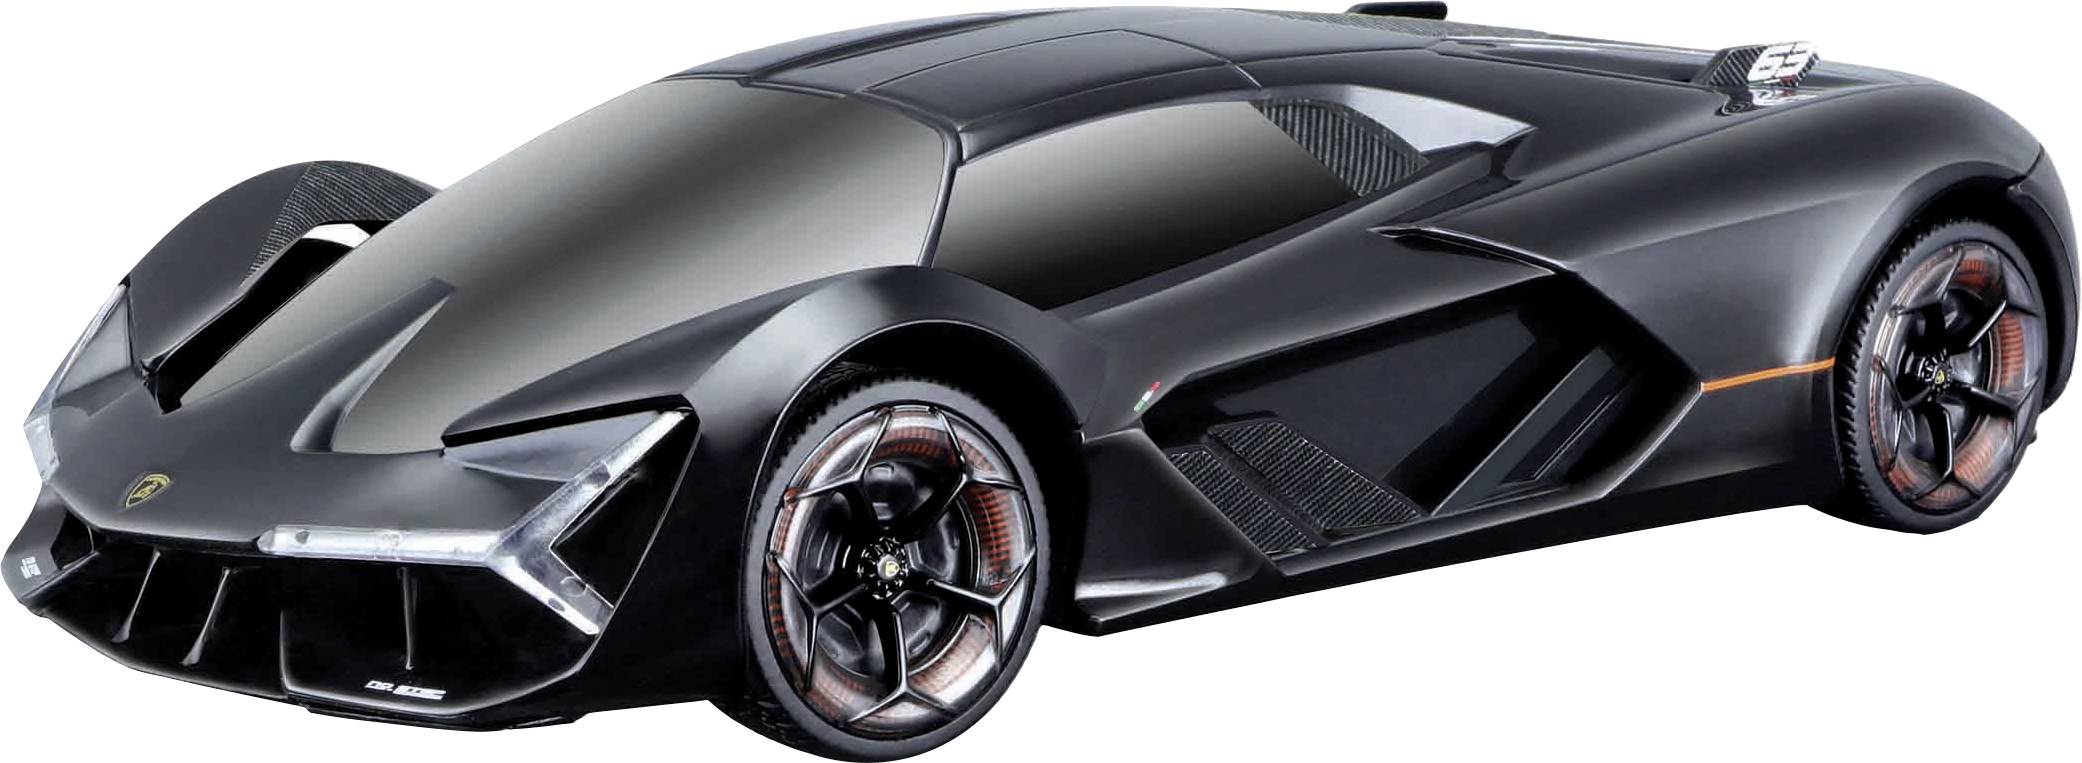 MaistoTech 581525 Lamborghini Terzo Millennio 1:24 RC model car for  beginners Electric RWD 